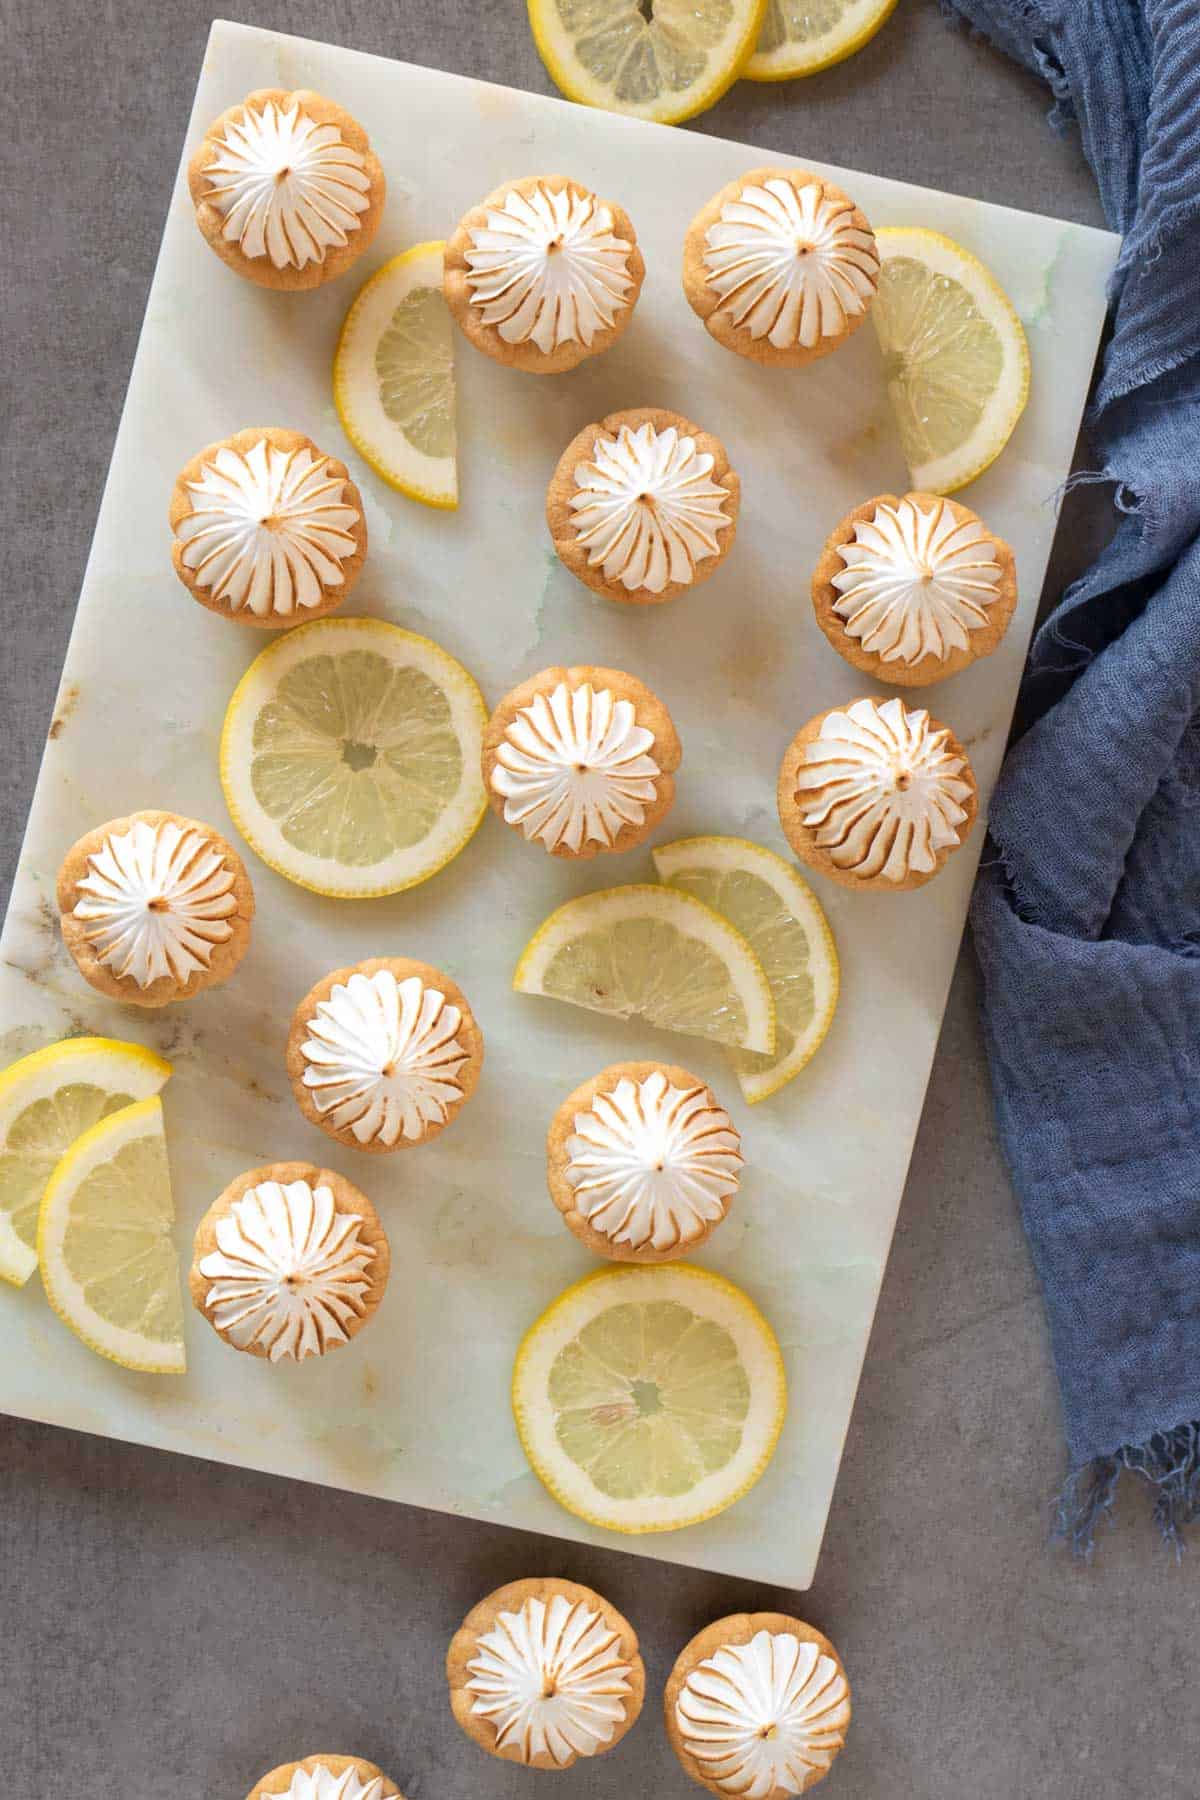 lemon meringue pie bites and lemon slices on a marble table